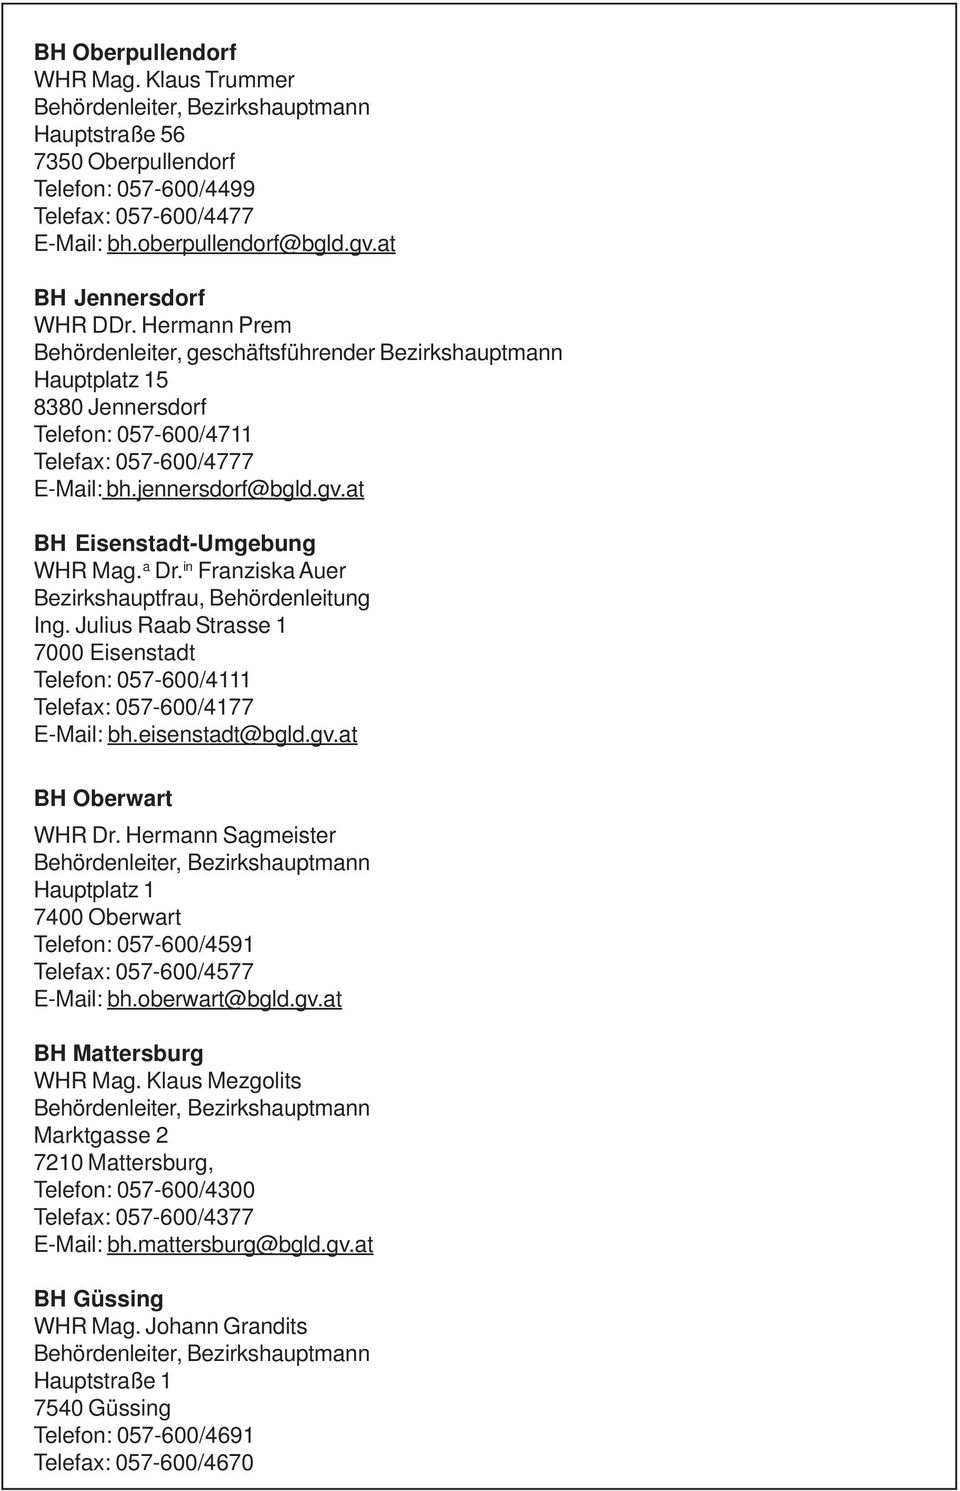 at BH Eisenstadt-Umgebung WHR Mag. a Dr. in Franziska Auer Bezirkshauptfrau, Behördenleitung Ing. Julius Raab Strasse 1 7000 Eisenstadt Telefon: 057-600/4111 Telefax: 057-600/4177 E-Mail: bh.